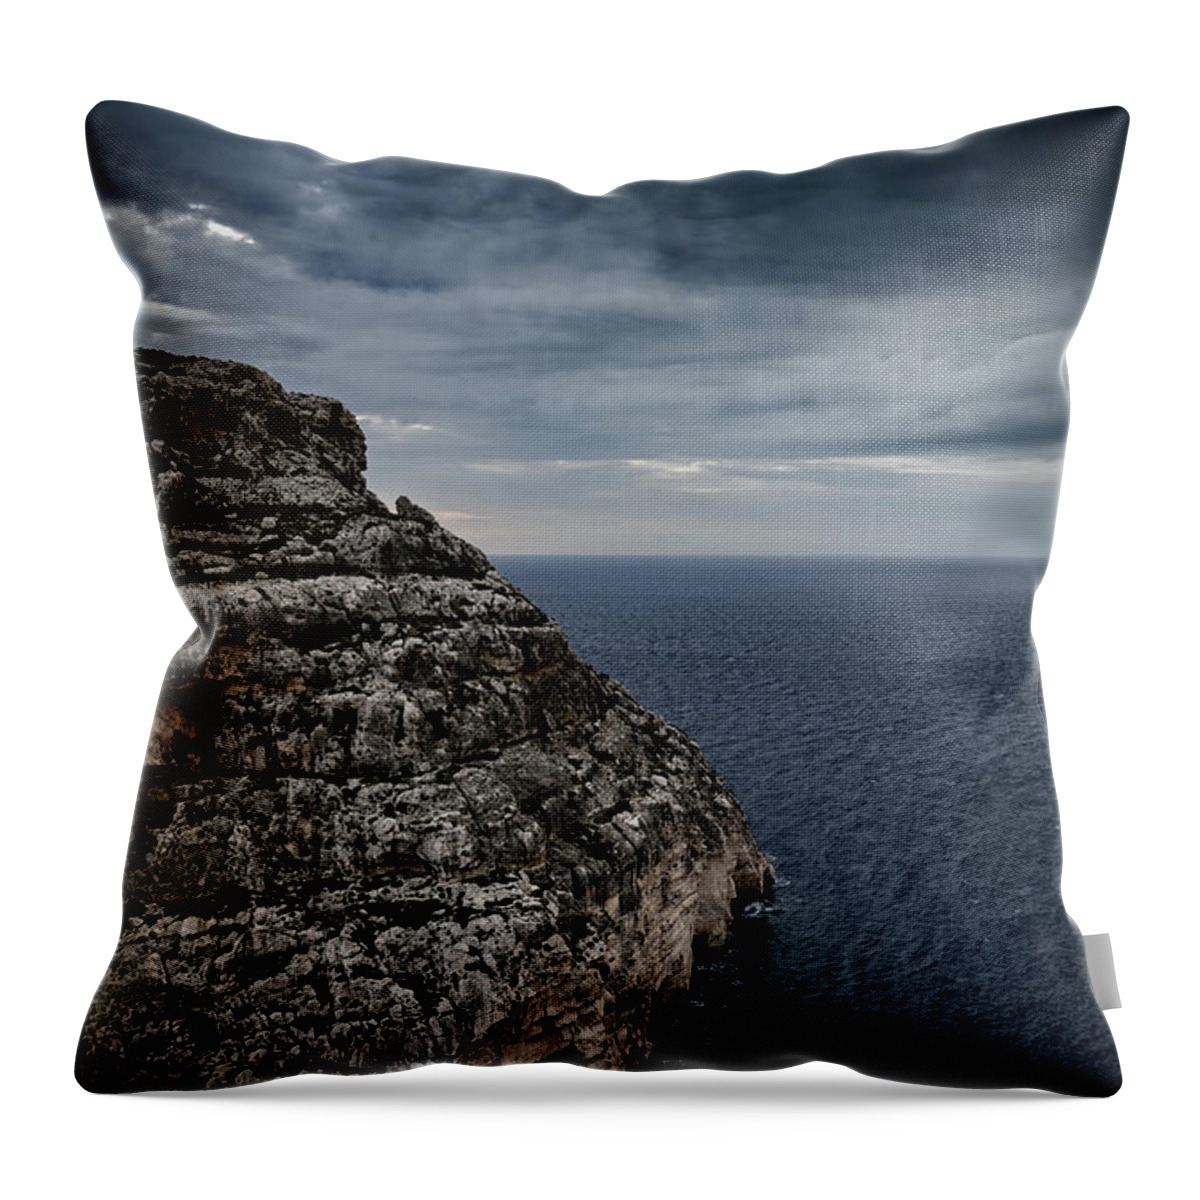 Malta Throw Pillow featuring the photograph Malta Island Sea Coast On Stormy Morning by Artur Bogacki